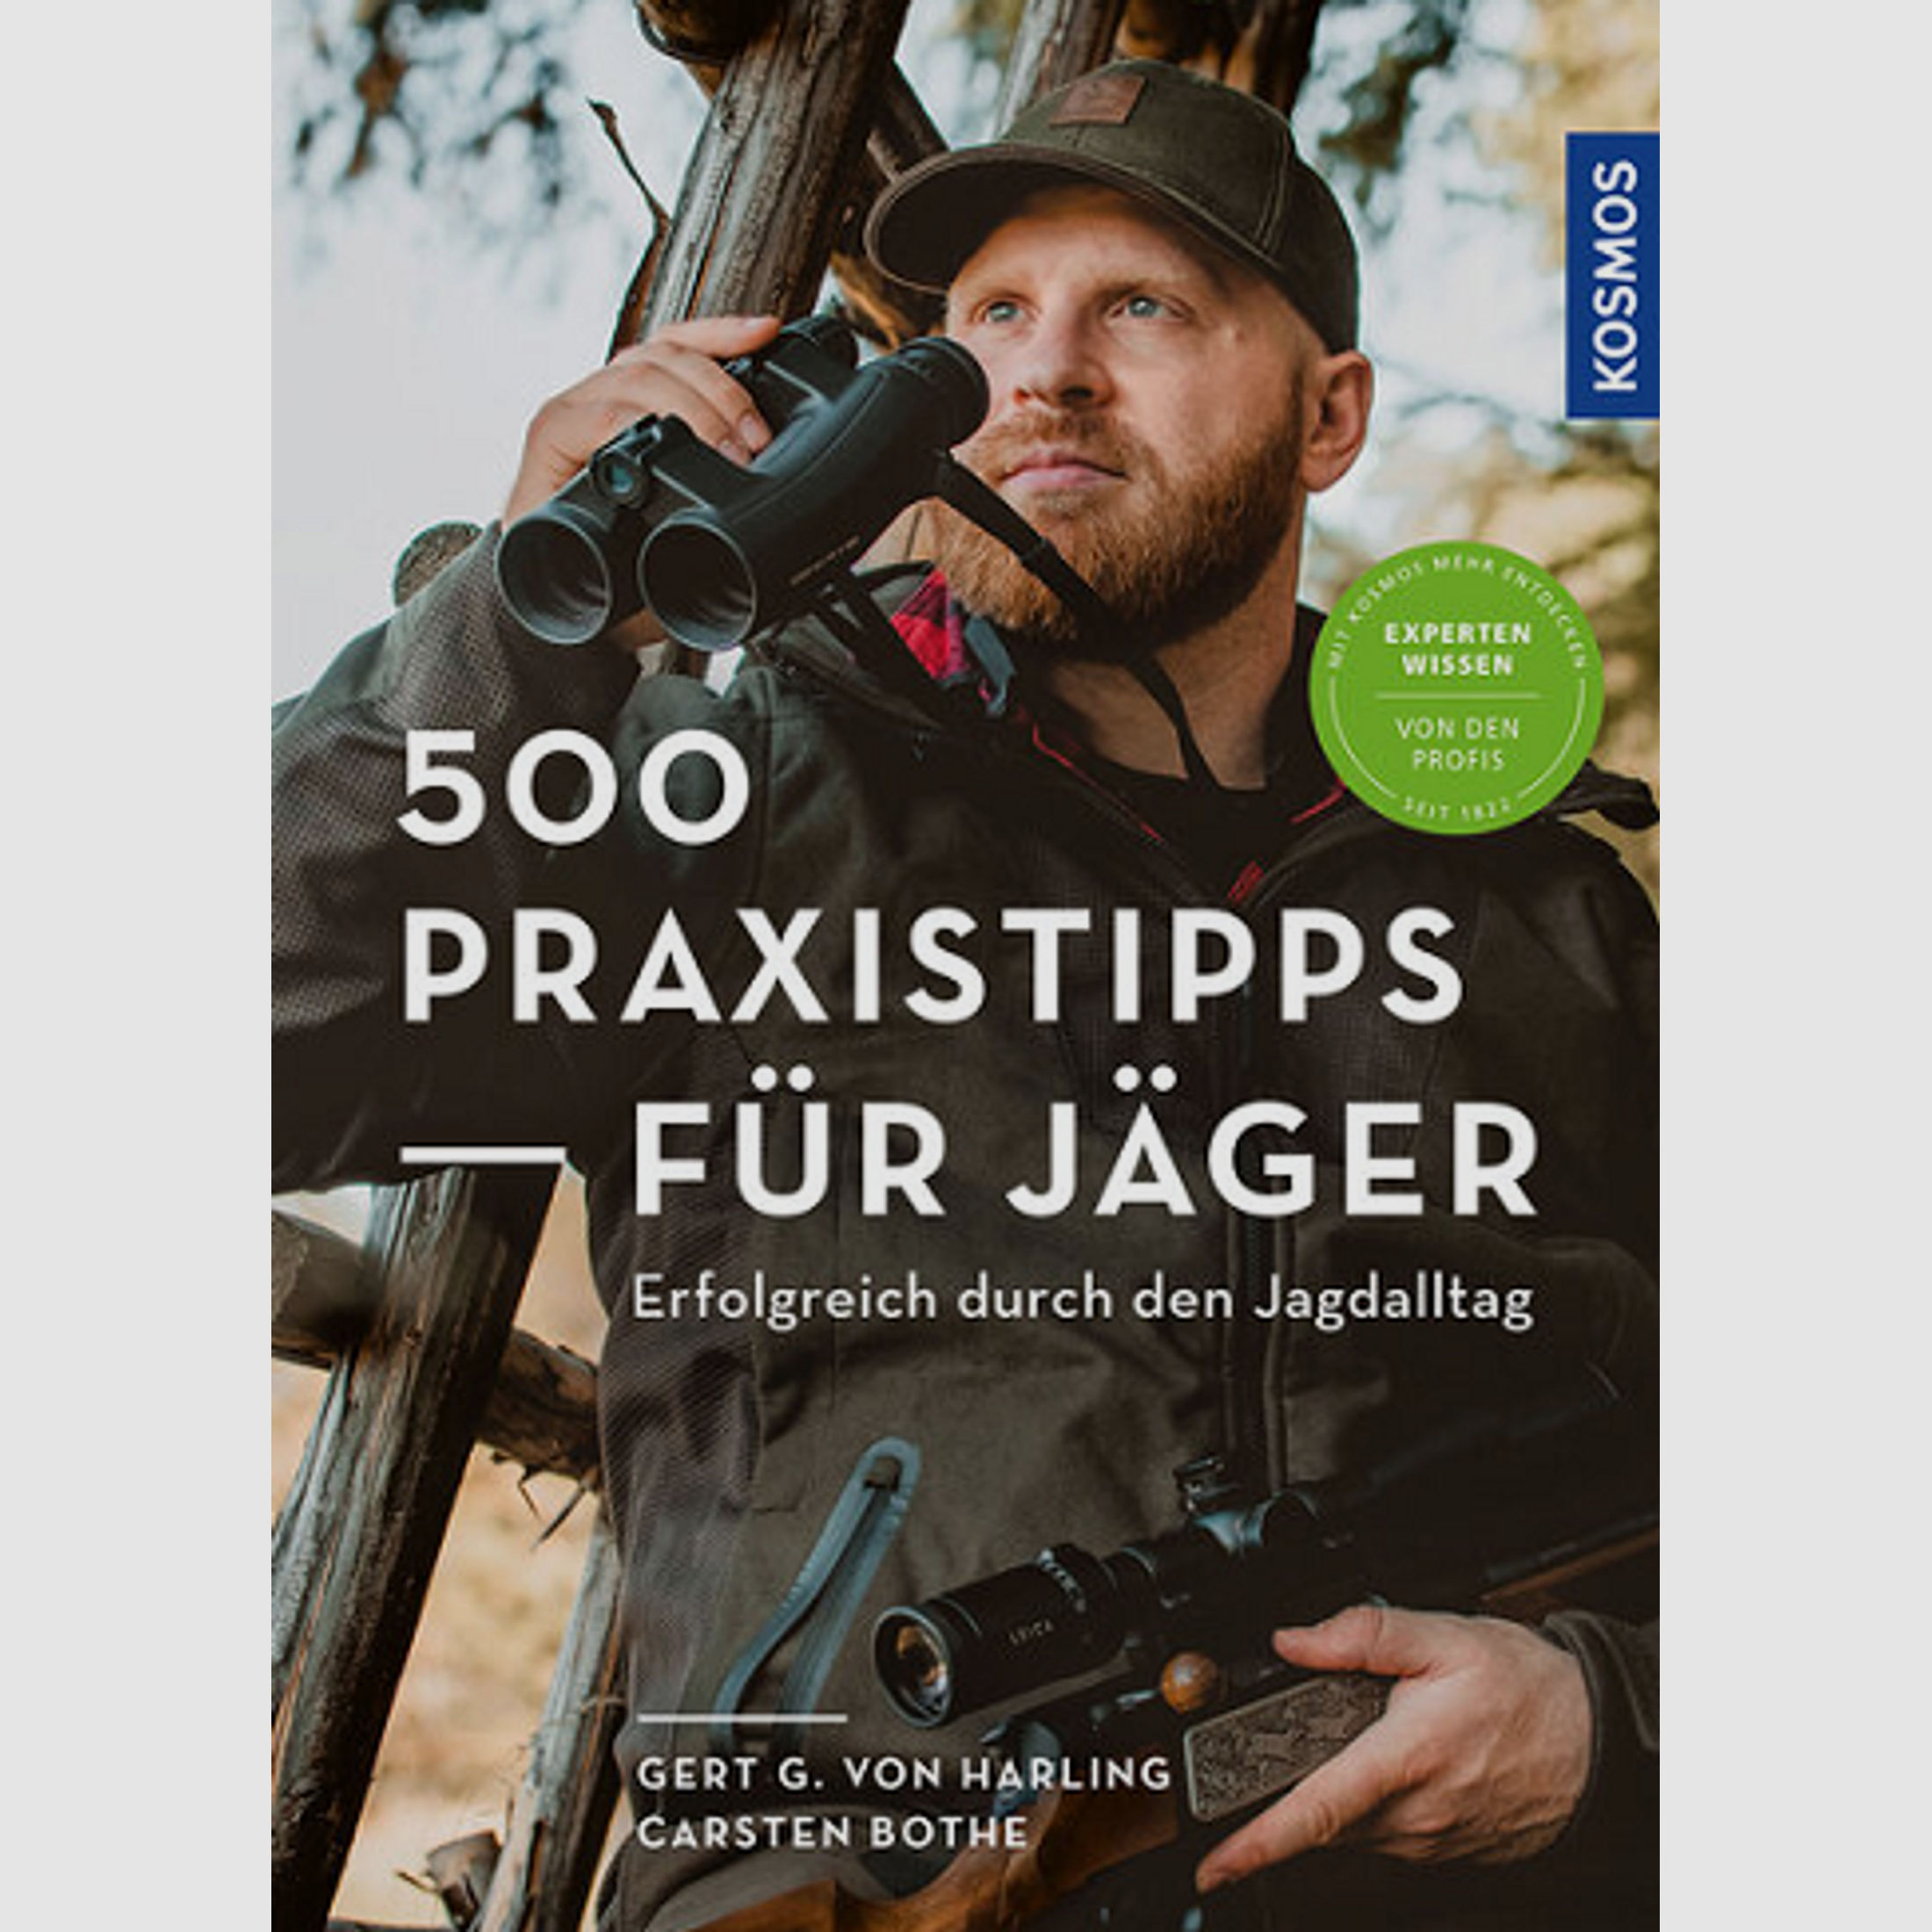 500 Praxistipps für Jäger - Harling & Bothe